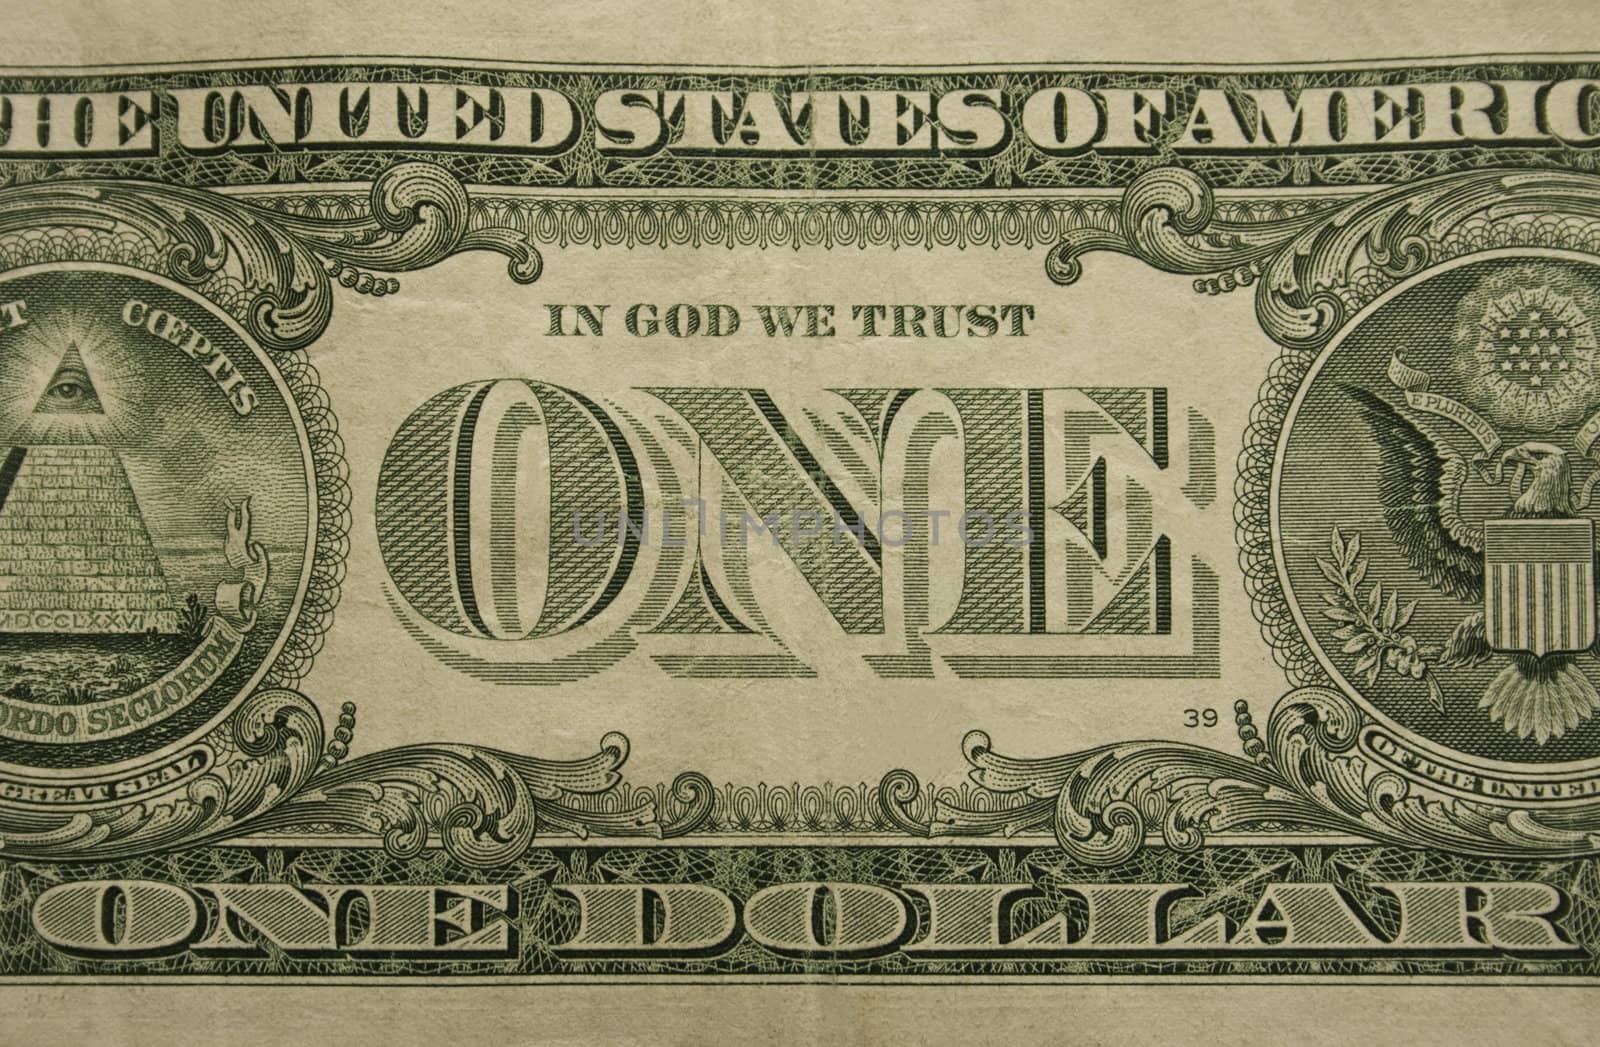 Bent one dollar bill